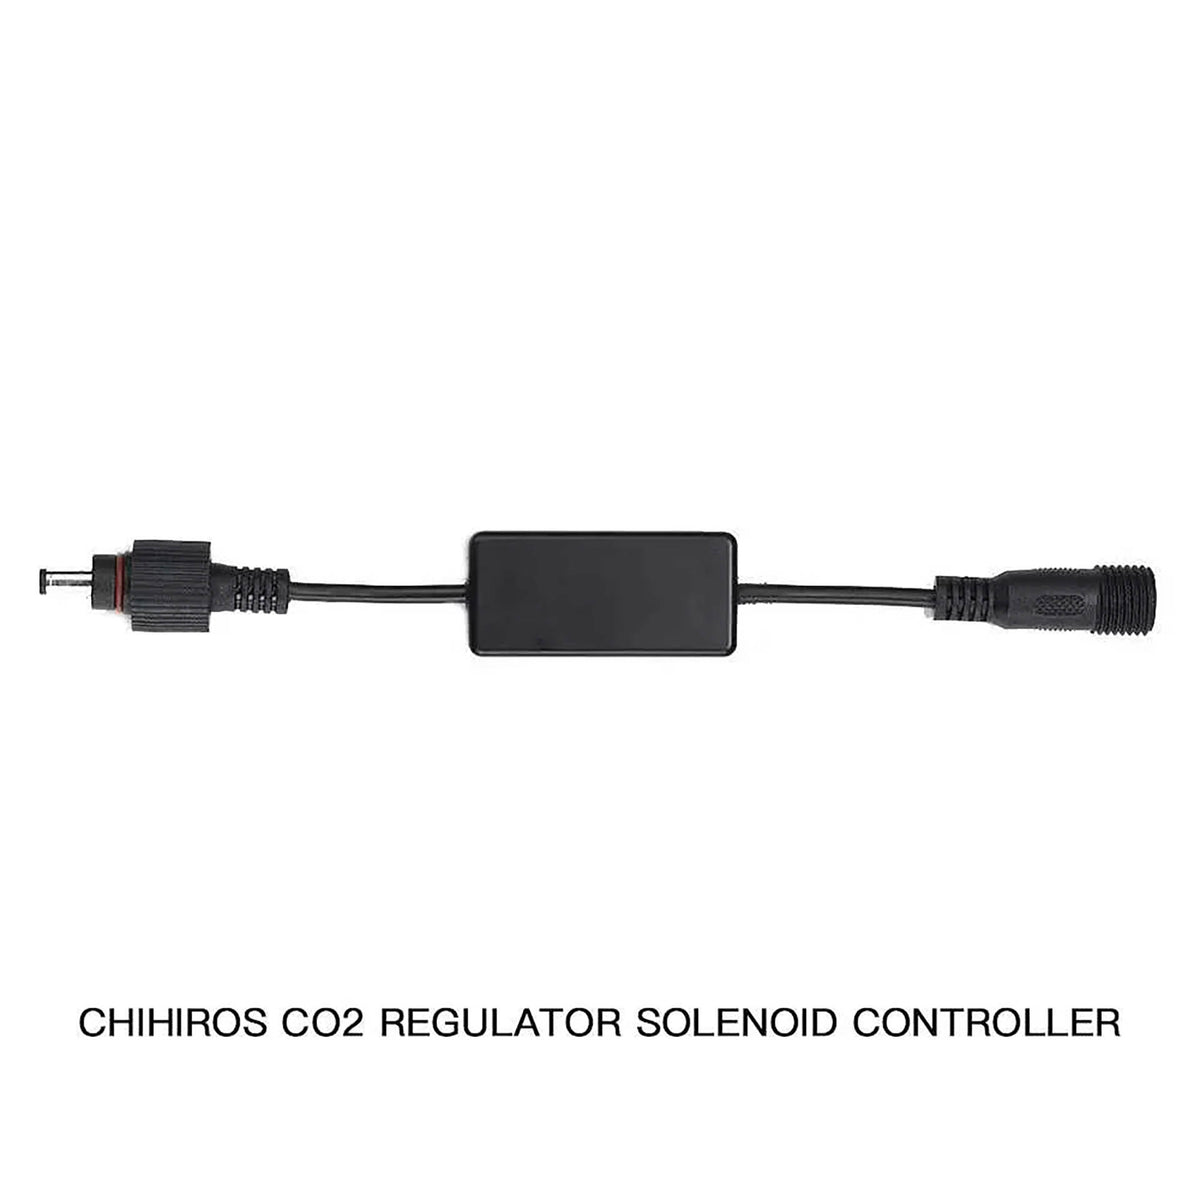 Chihiros Solenoid Controller for CO2 Regulator